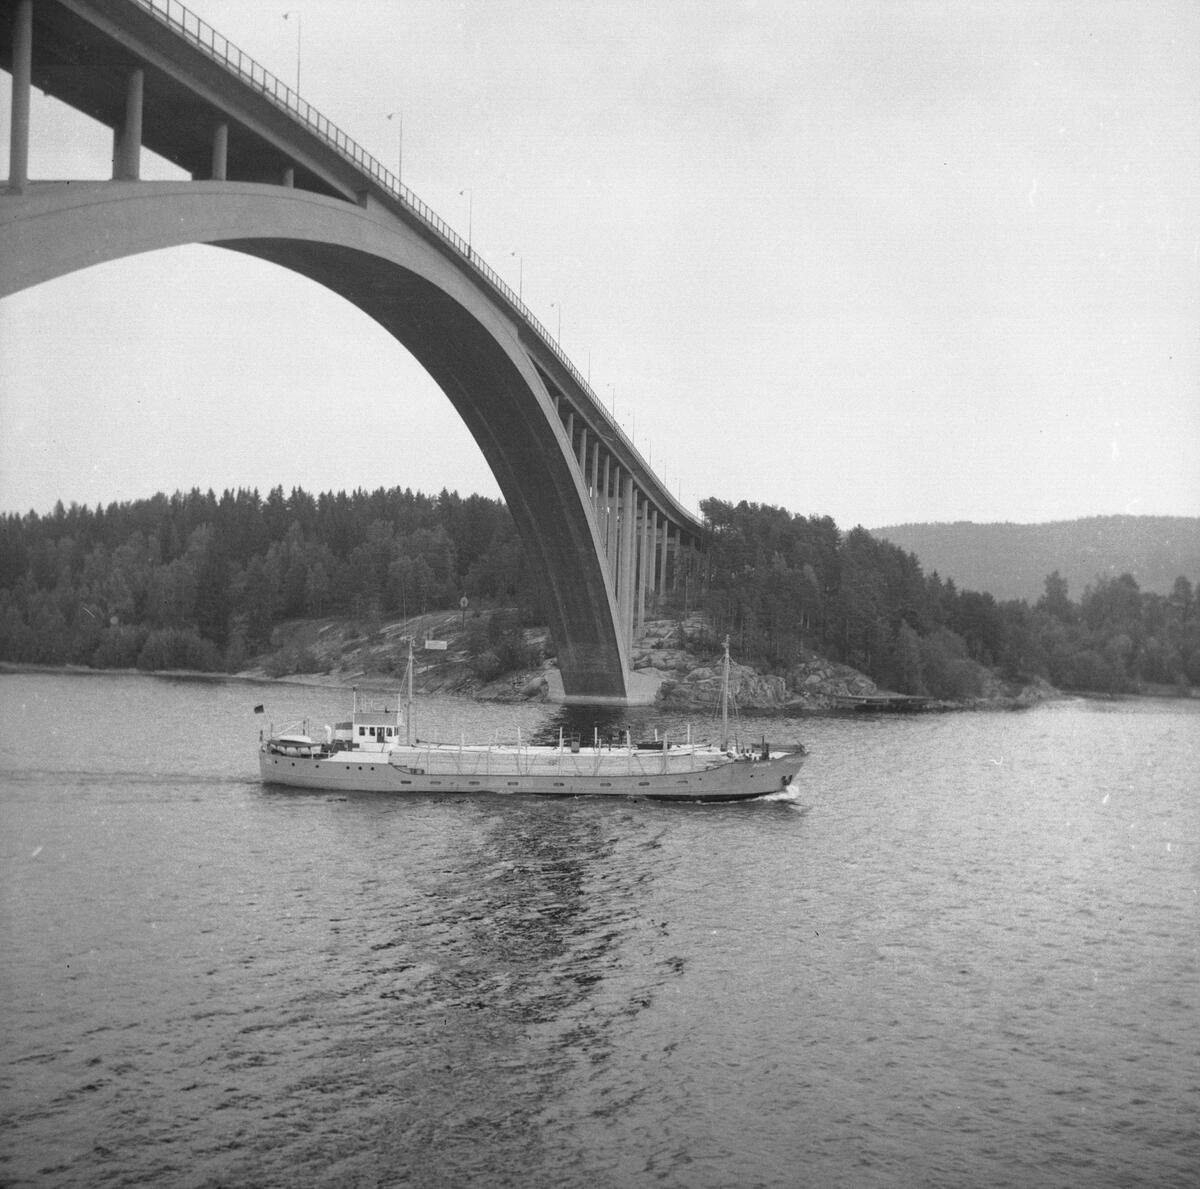 Fartyget Rugen vid Sandöbron

